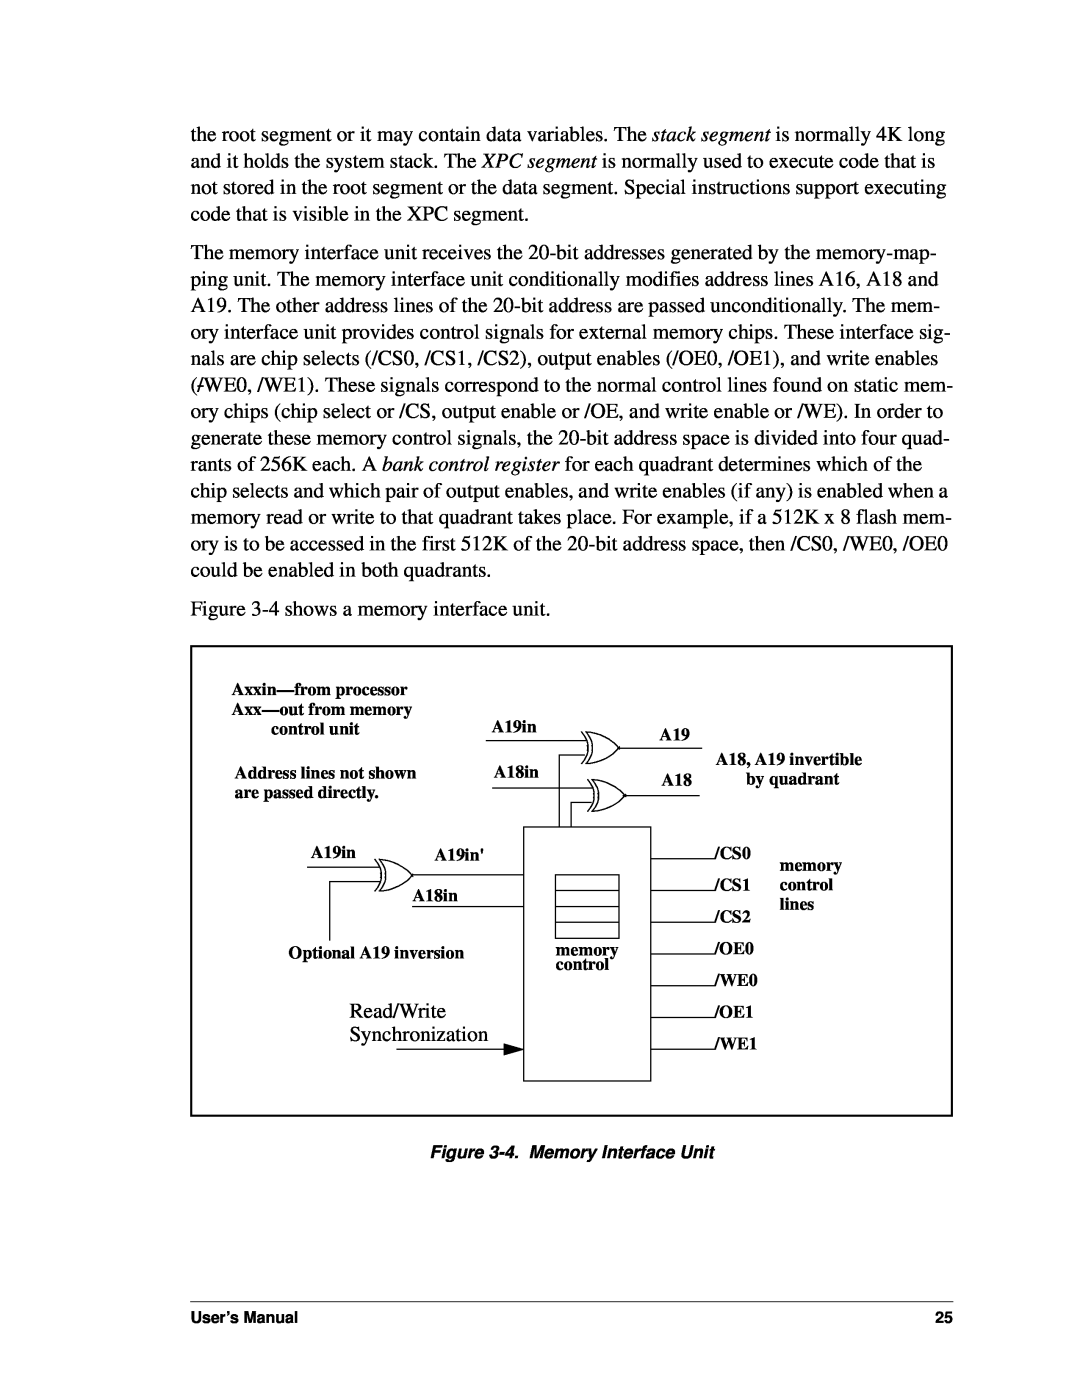 Jameco Electronics 3000, 2000 manual 4 shows a memory interface unit 